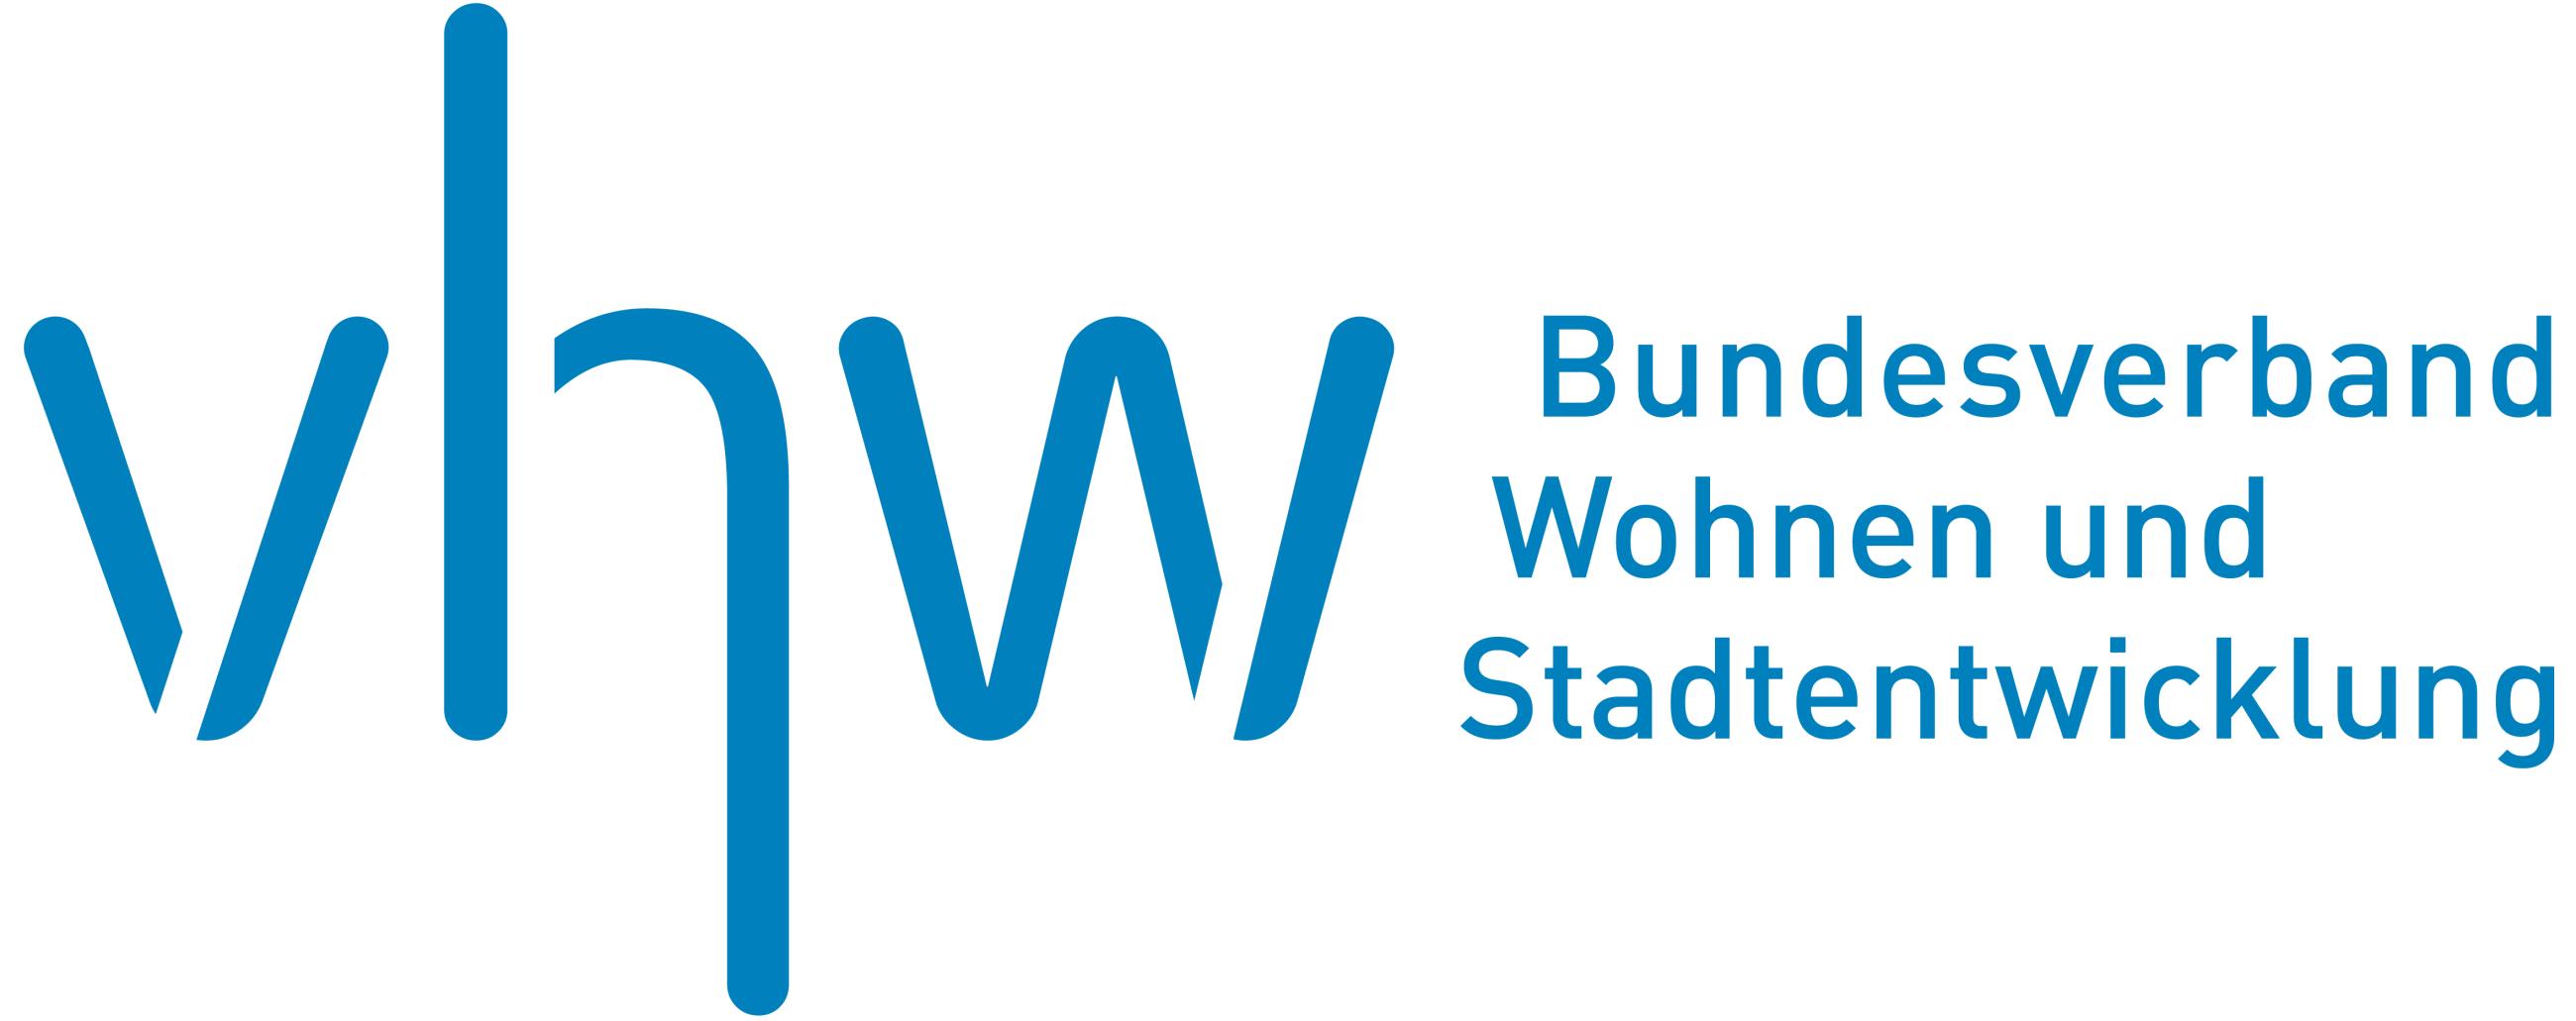 vhw logo